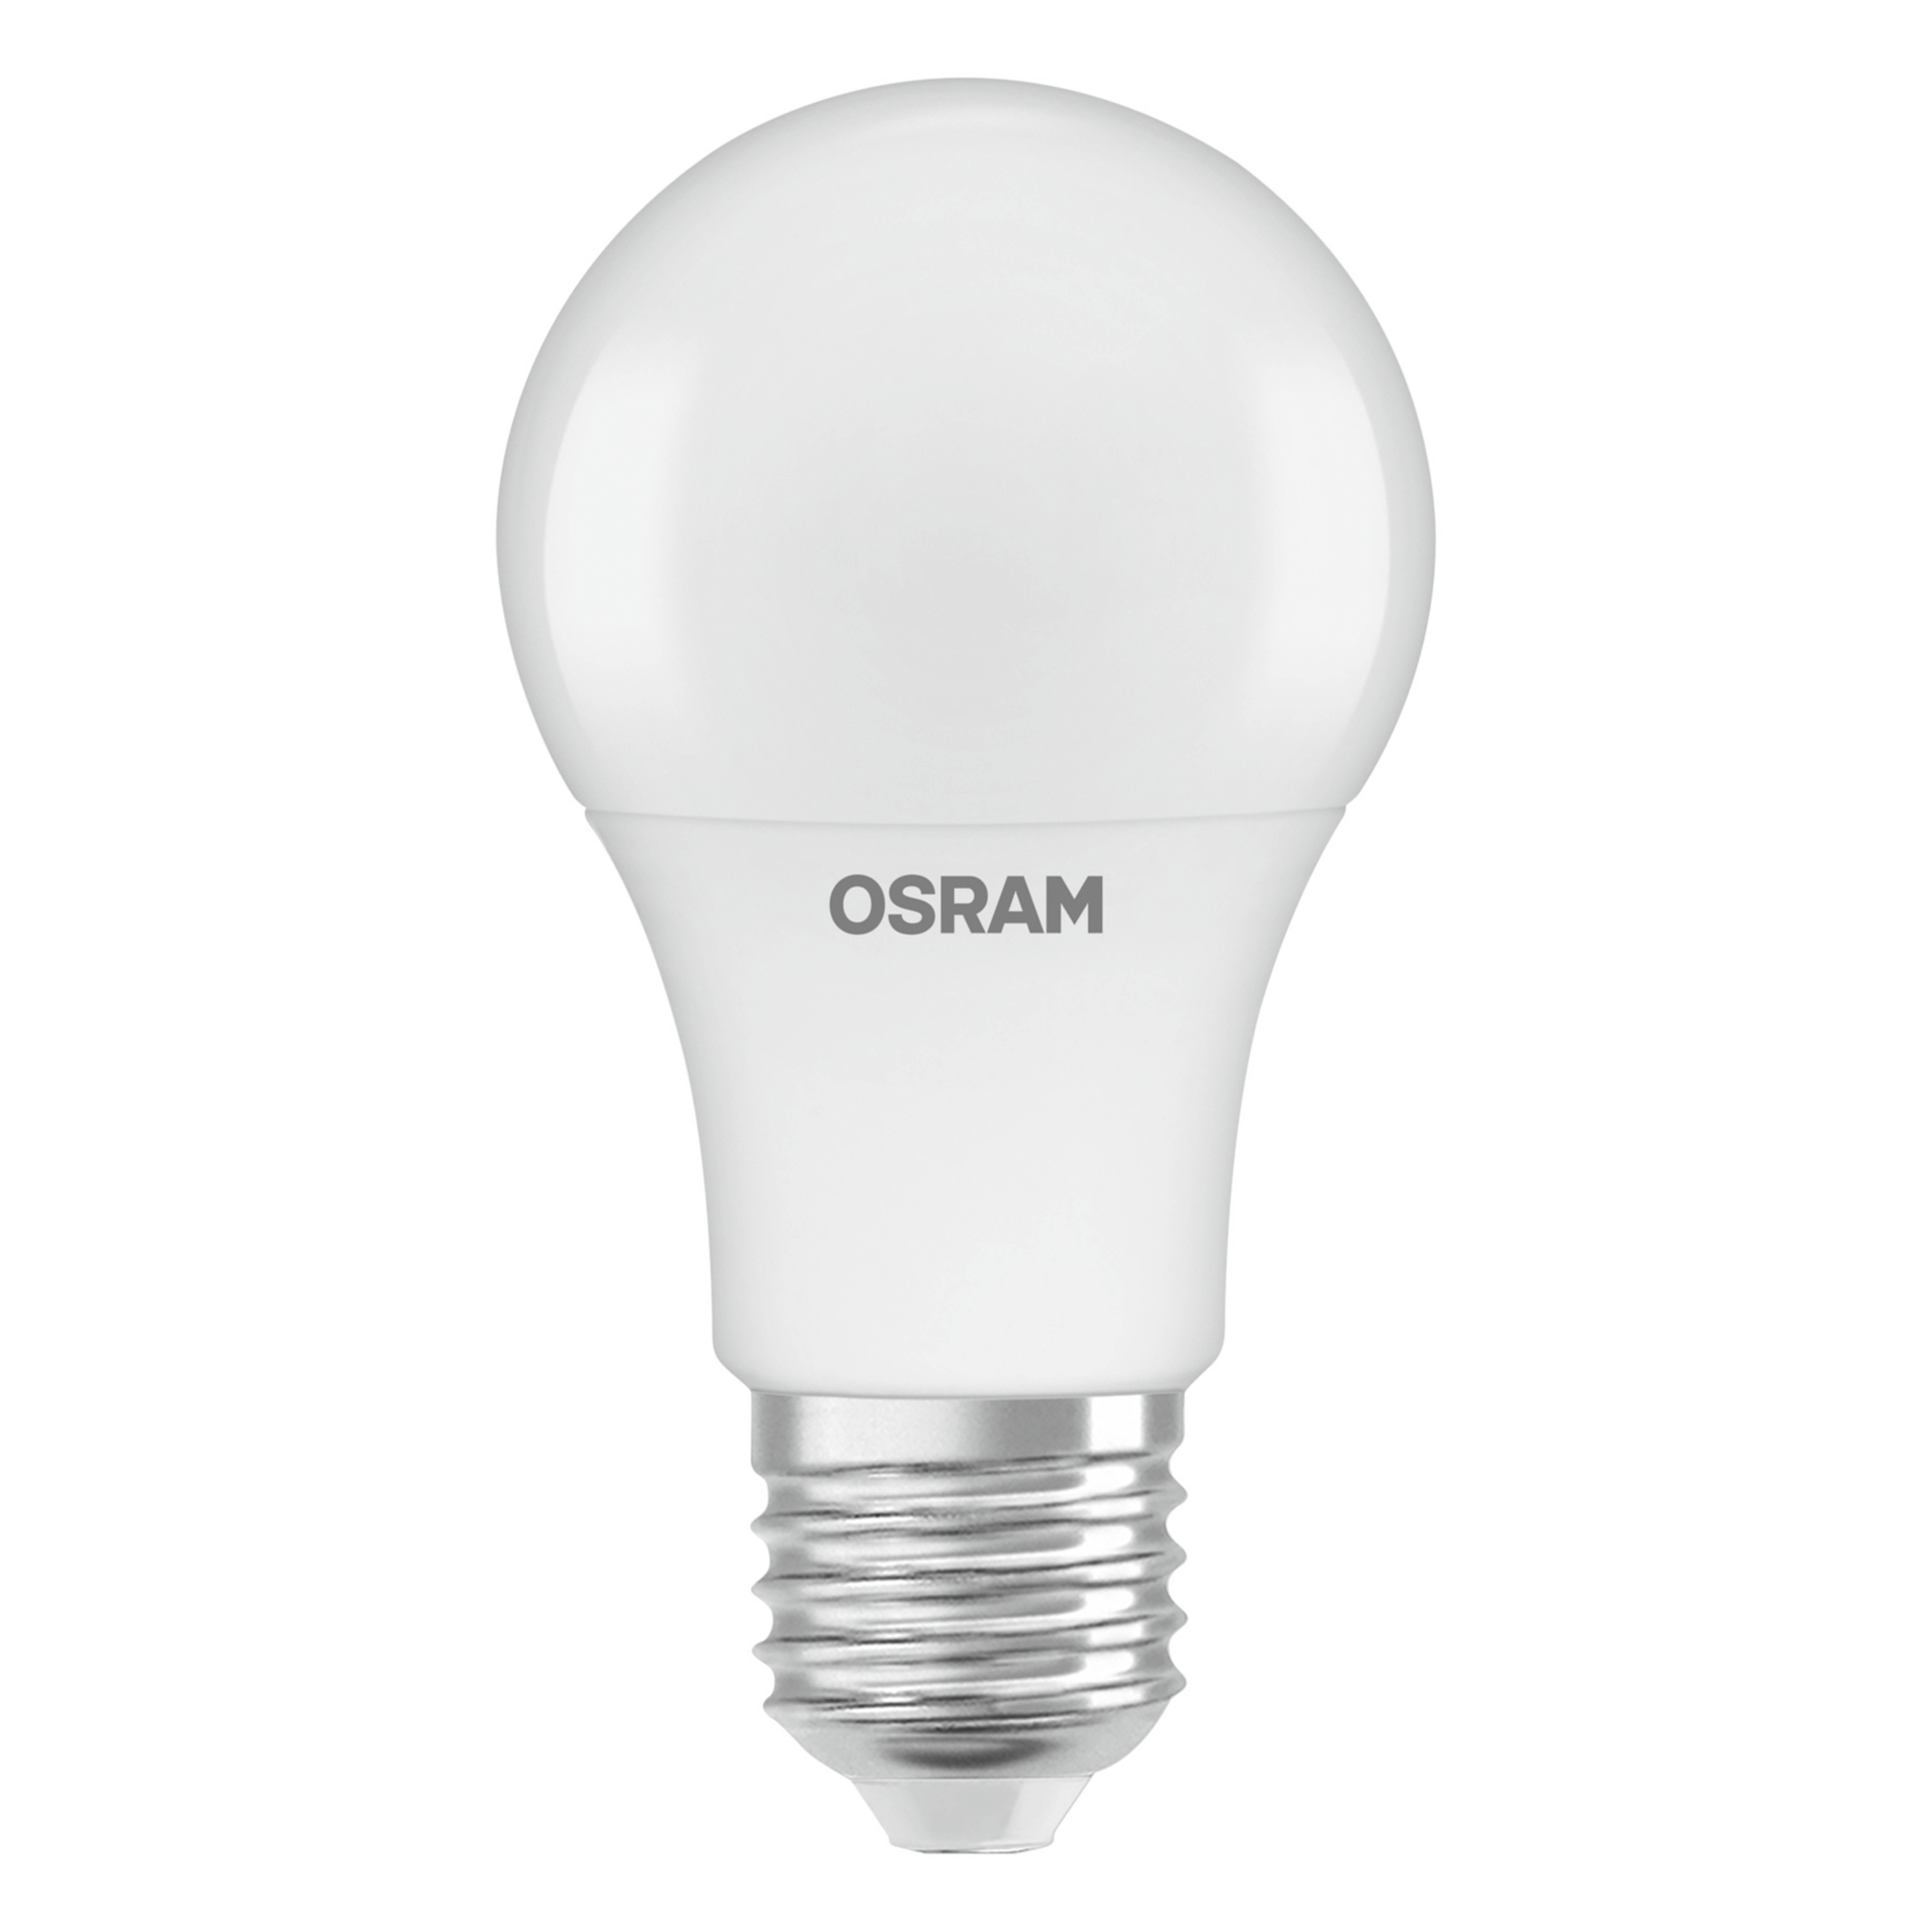 OSRAM LED lamp E27 4,9W opaal daglichtsensor